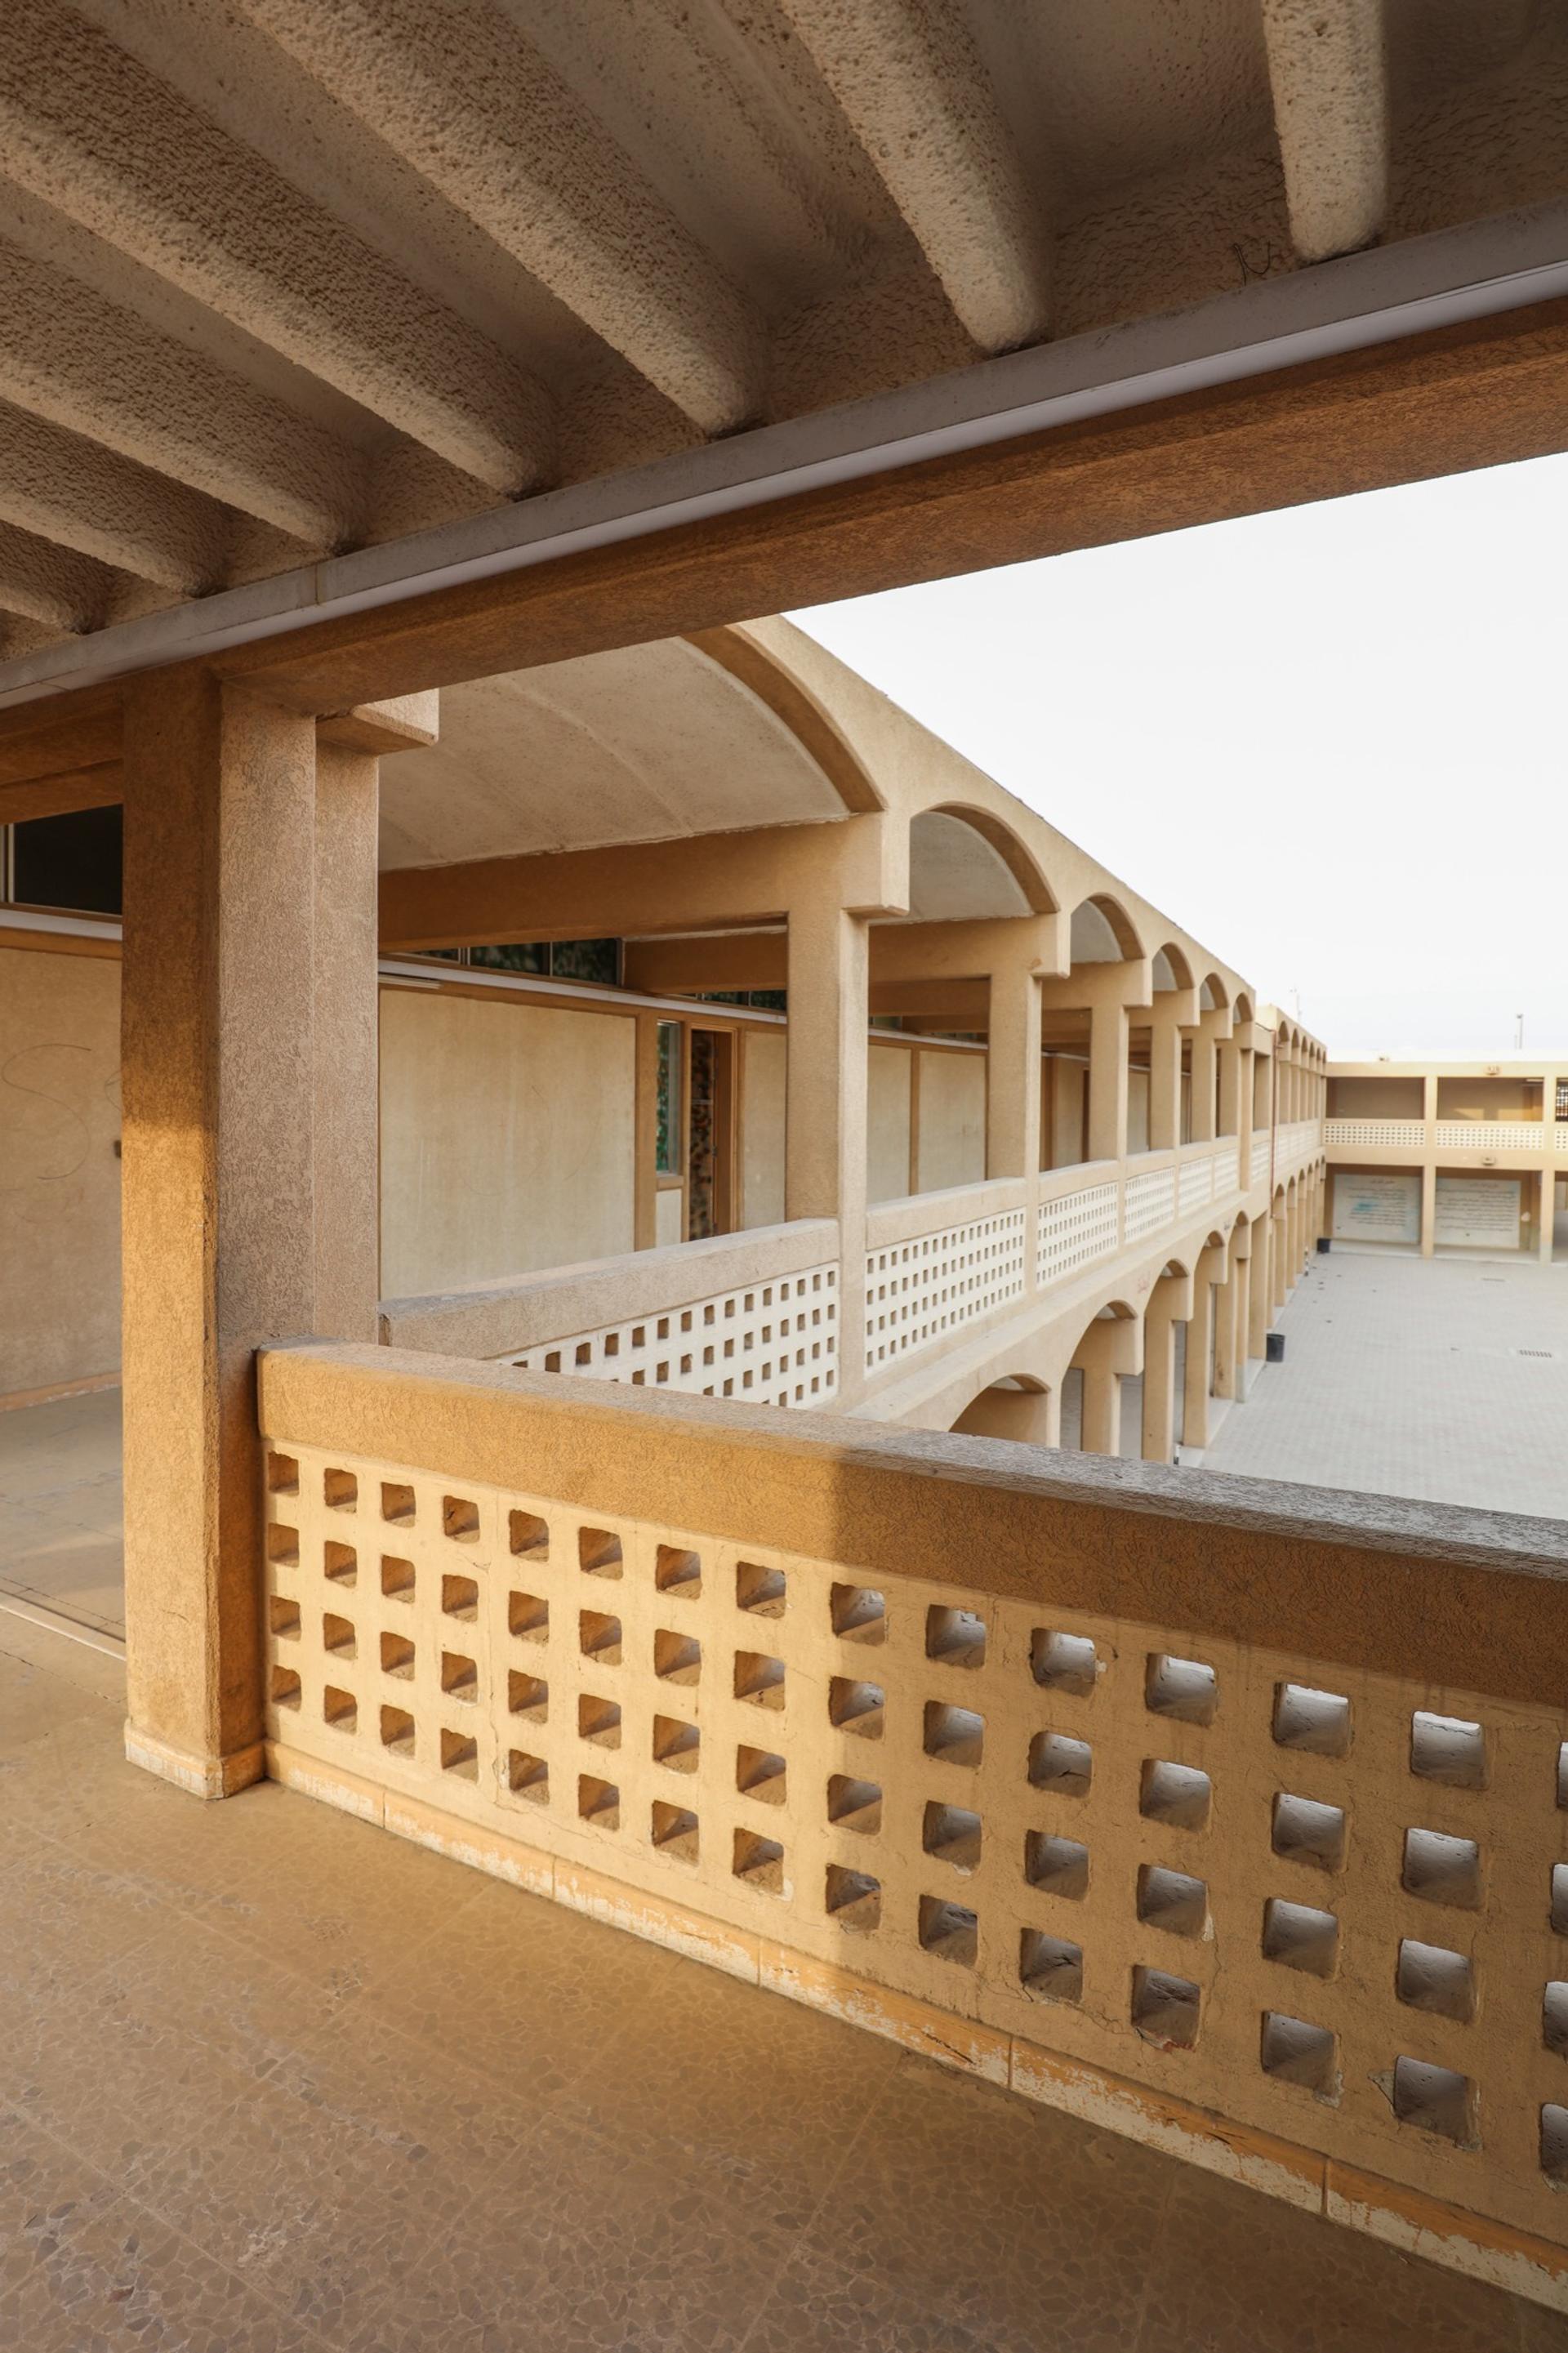 Al Qasimiyah School, Sharjah. Courtesy of the Sharjah Architecture Triennial, 2019.